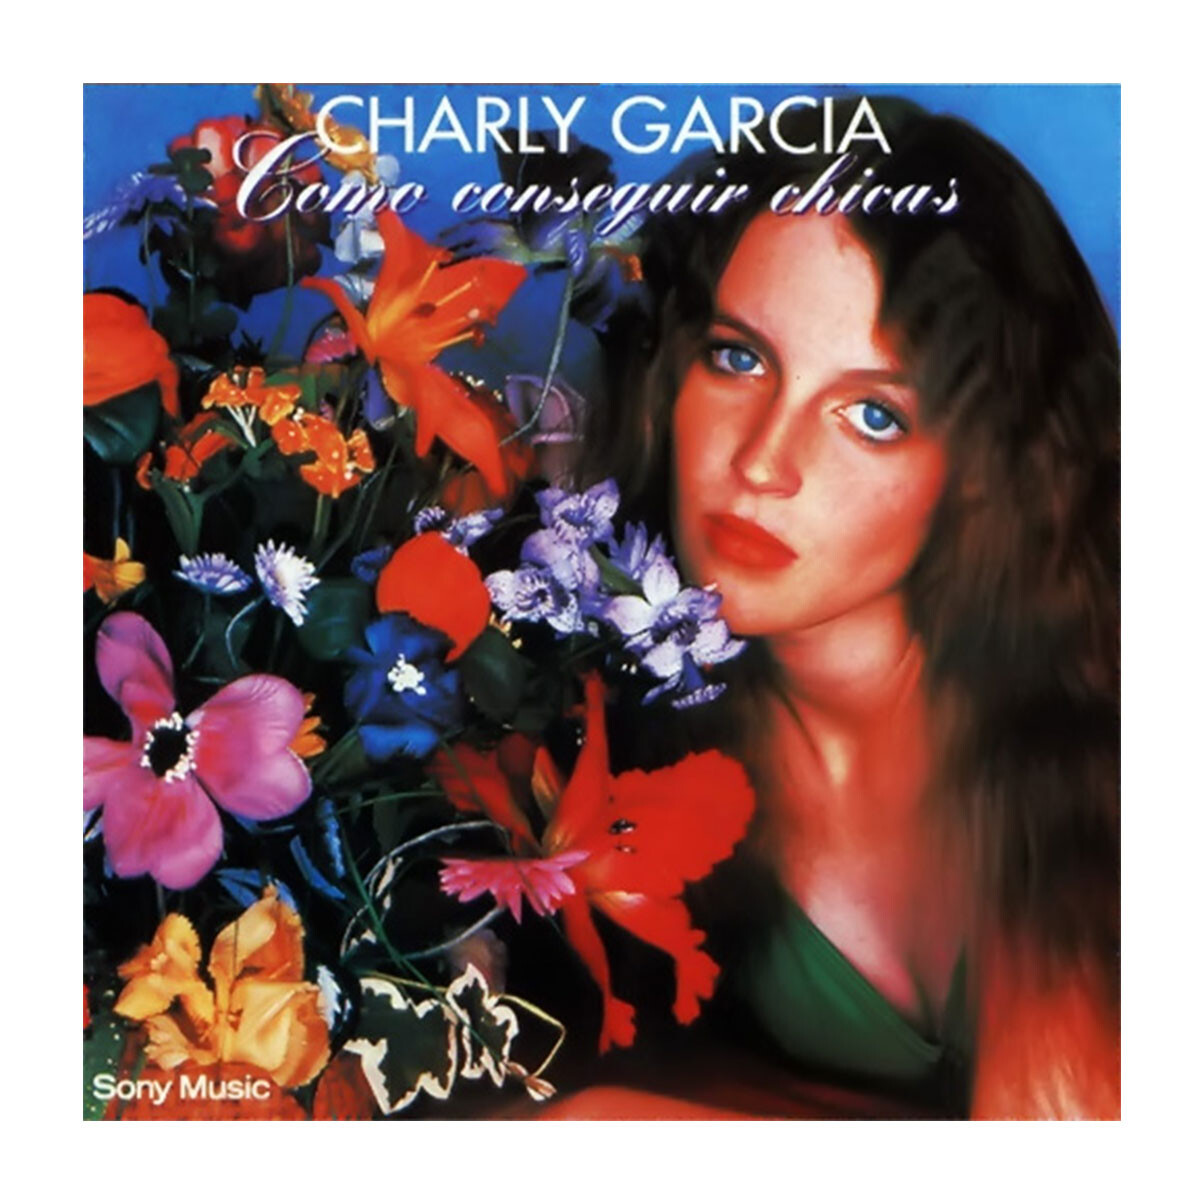 Charly Garcia-como Conseguir Chicas - Vinilo 